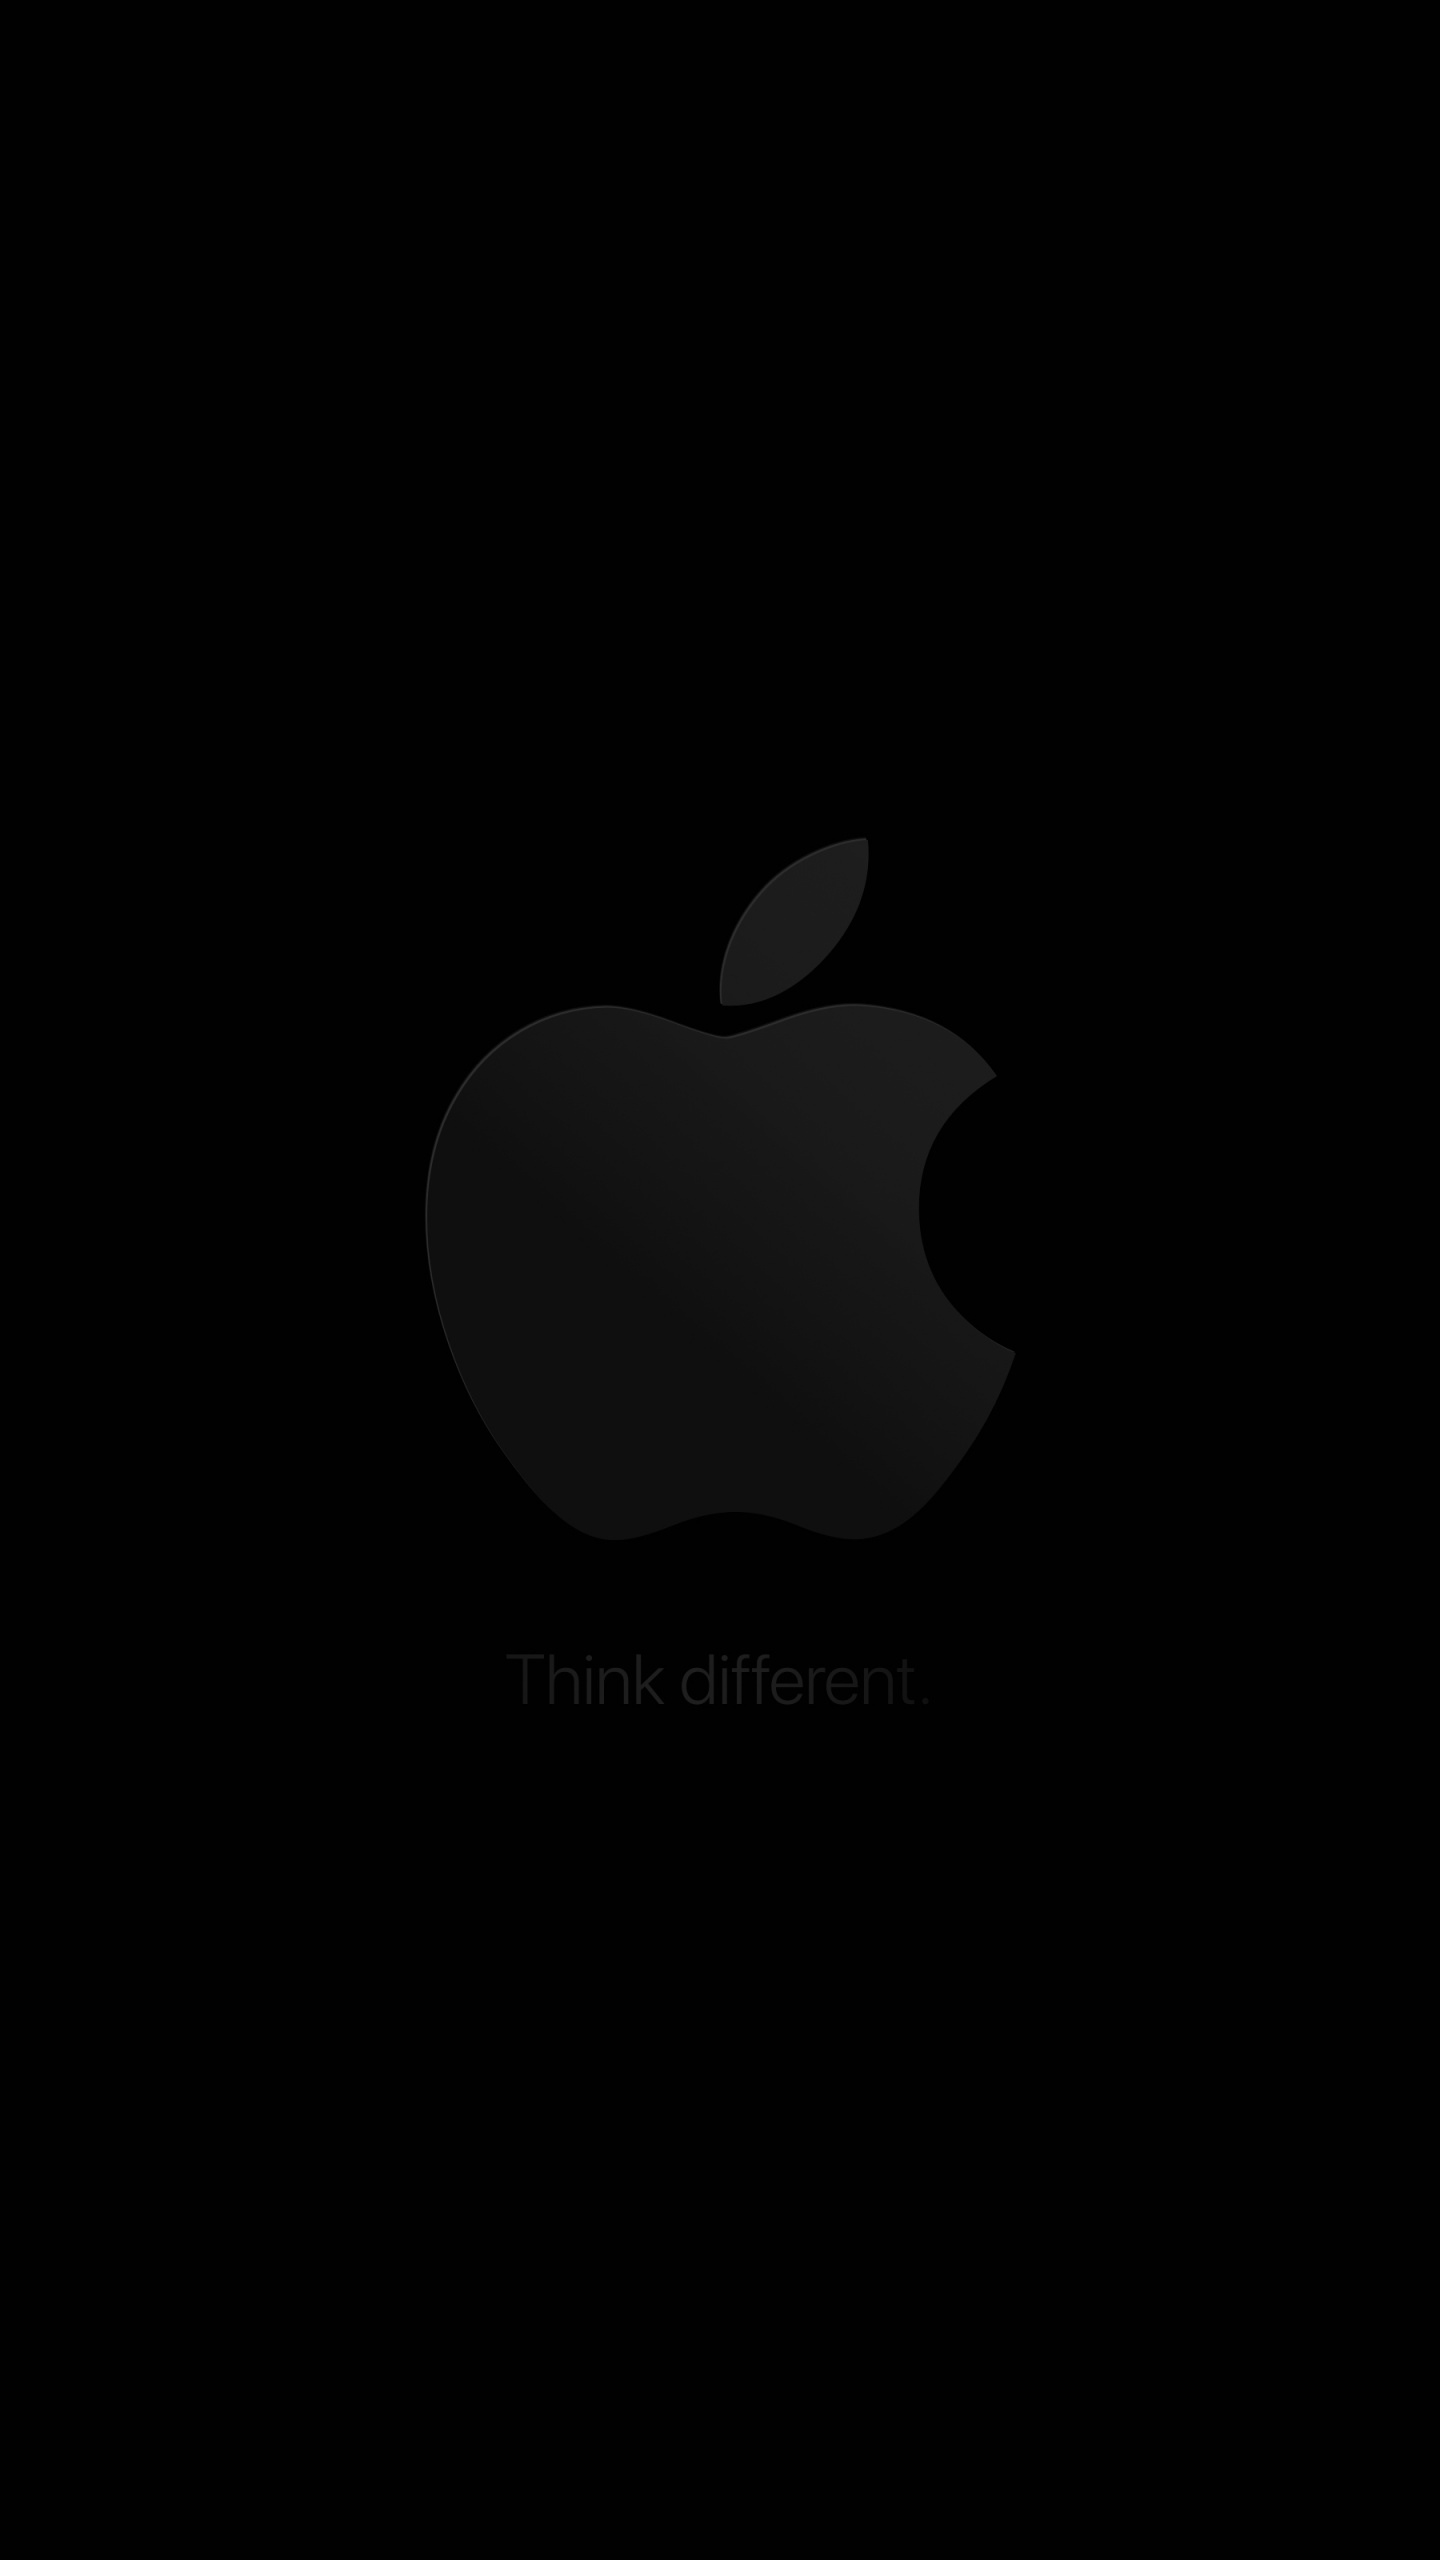 Apple logo Wallpaper 4K, Think different, #9999